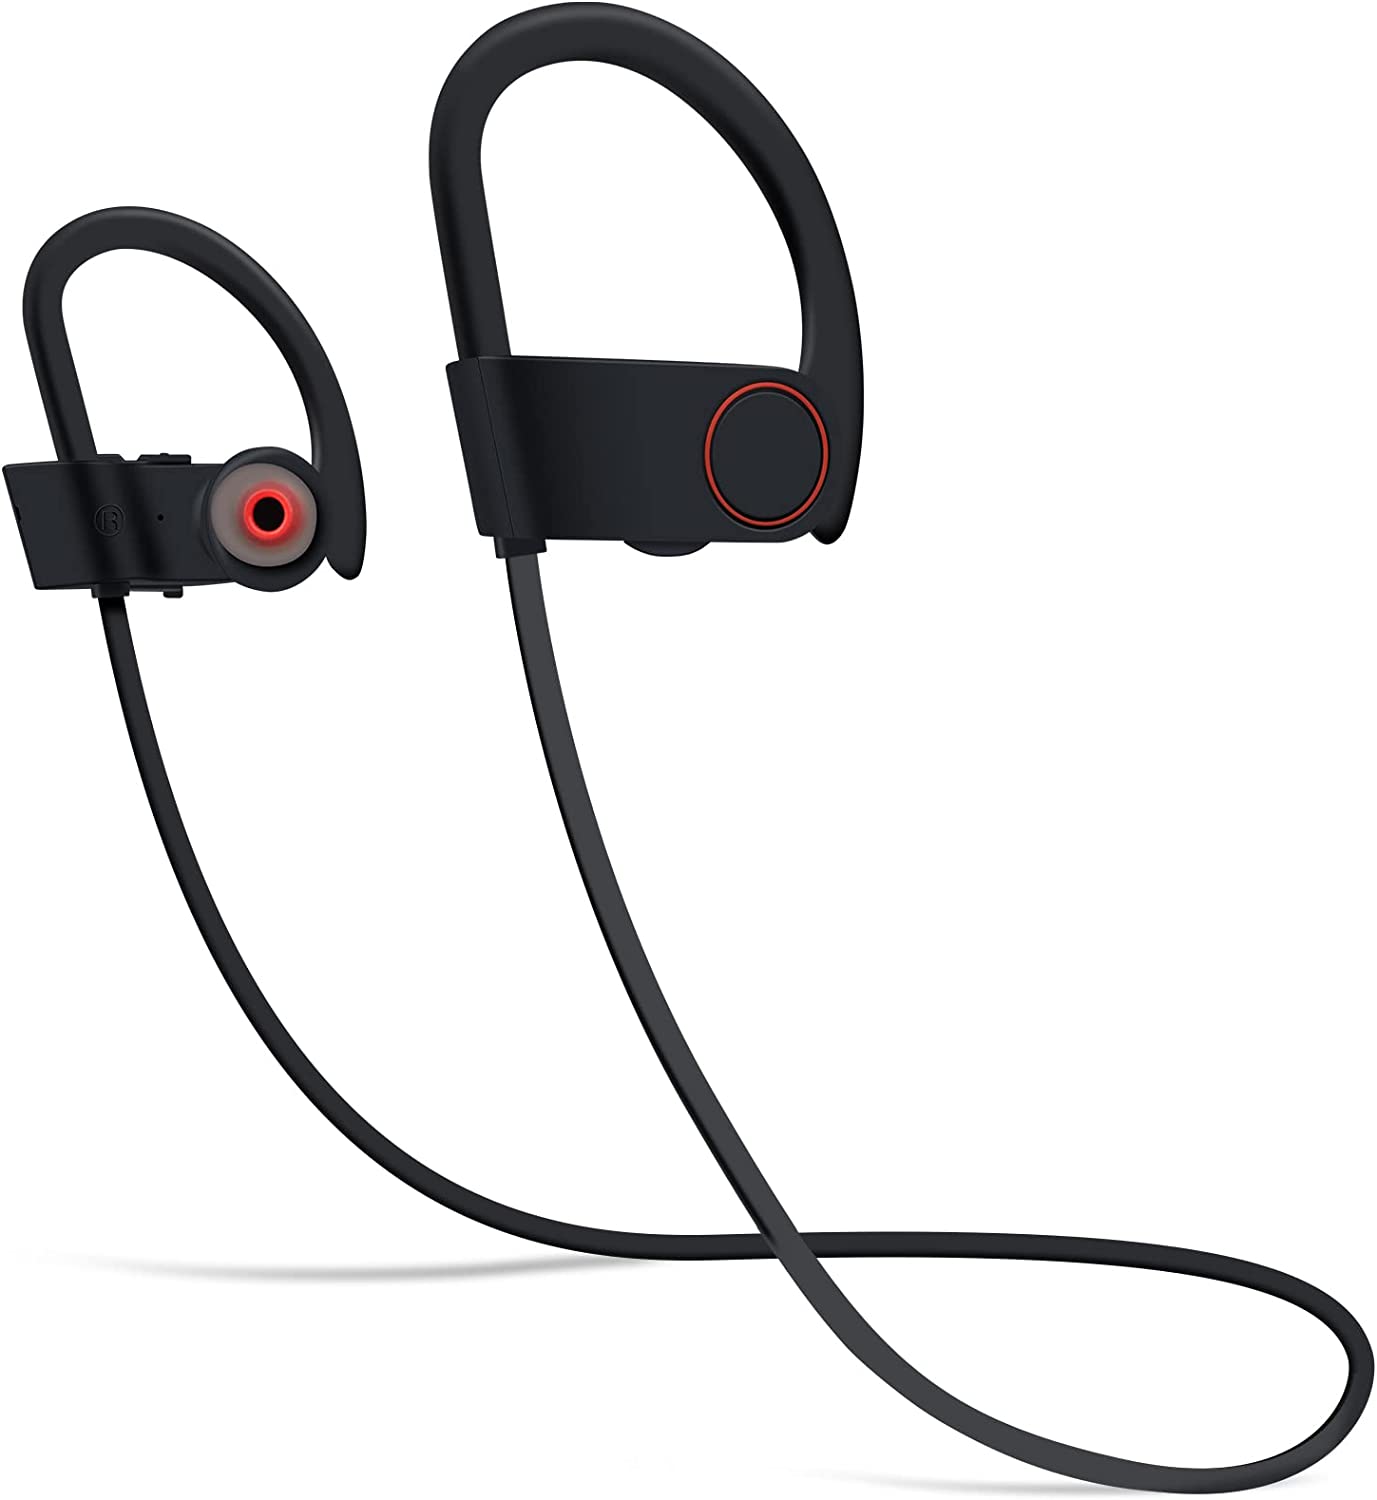 Sport Earphones，Bluetooth Headphones 5.0, Wireless Headset,IPX7 Waterproof in-Ear Earphone,Deep Bass + HD CVC6.0 Noise Cancelling Stereo Sweatproof Earbuds with Microphone for Gym Running Home Workout